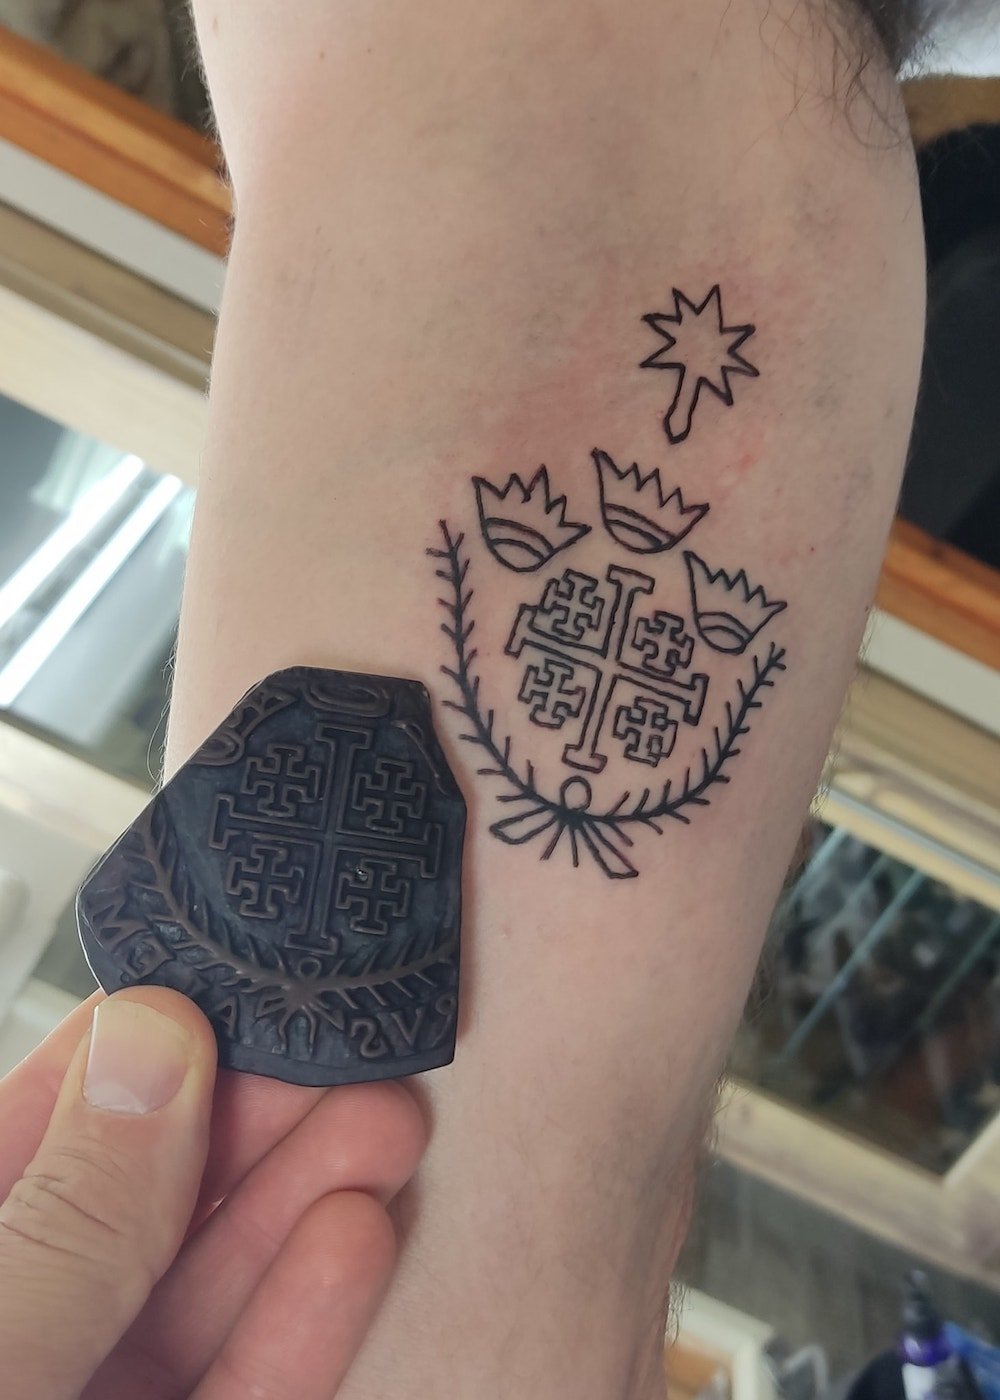 Getting a medieval tattoo in Jerusalem